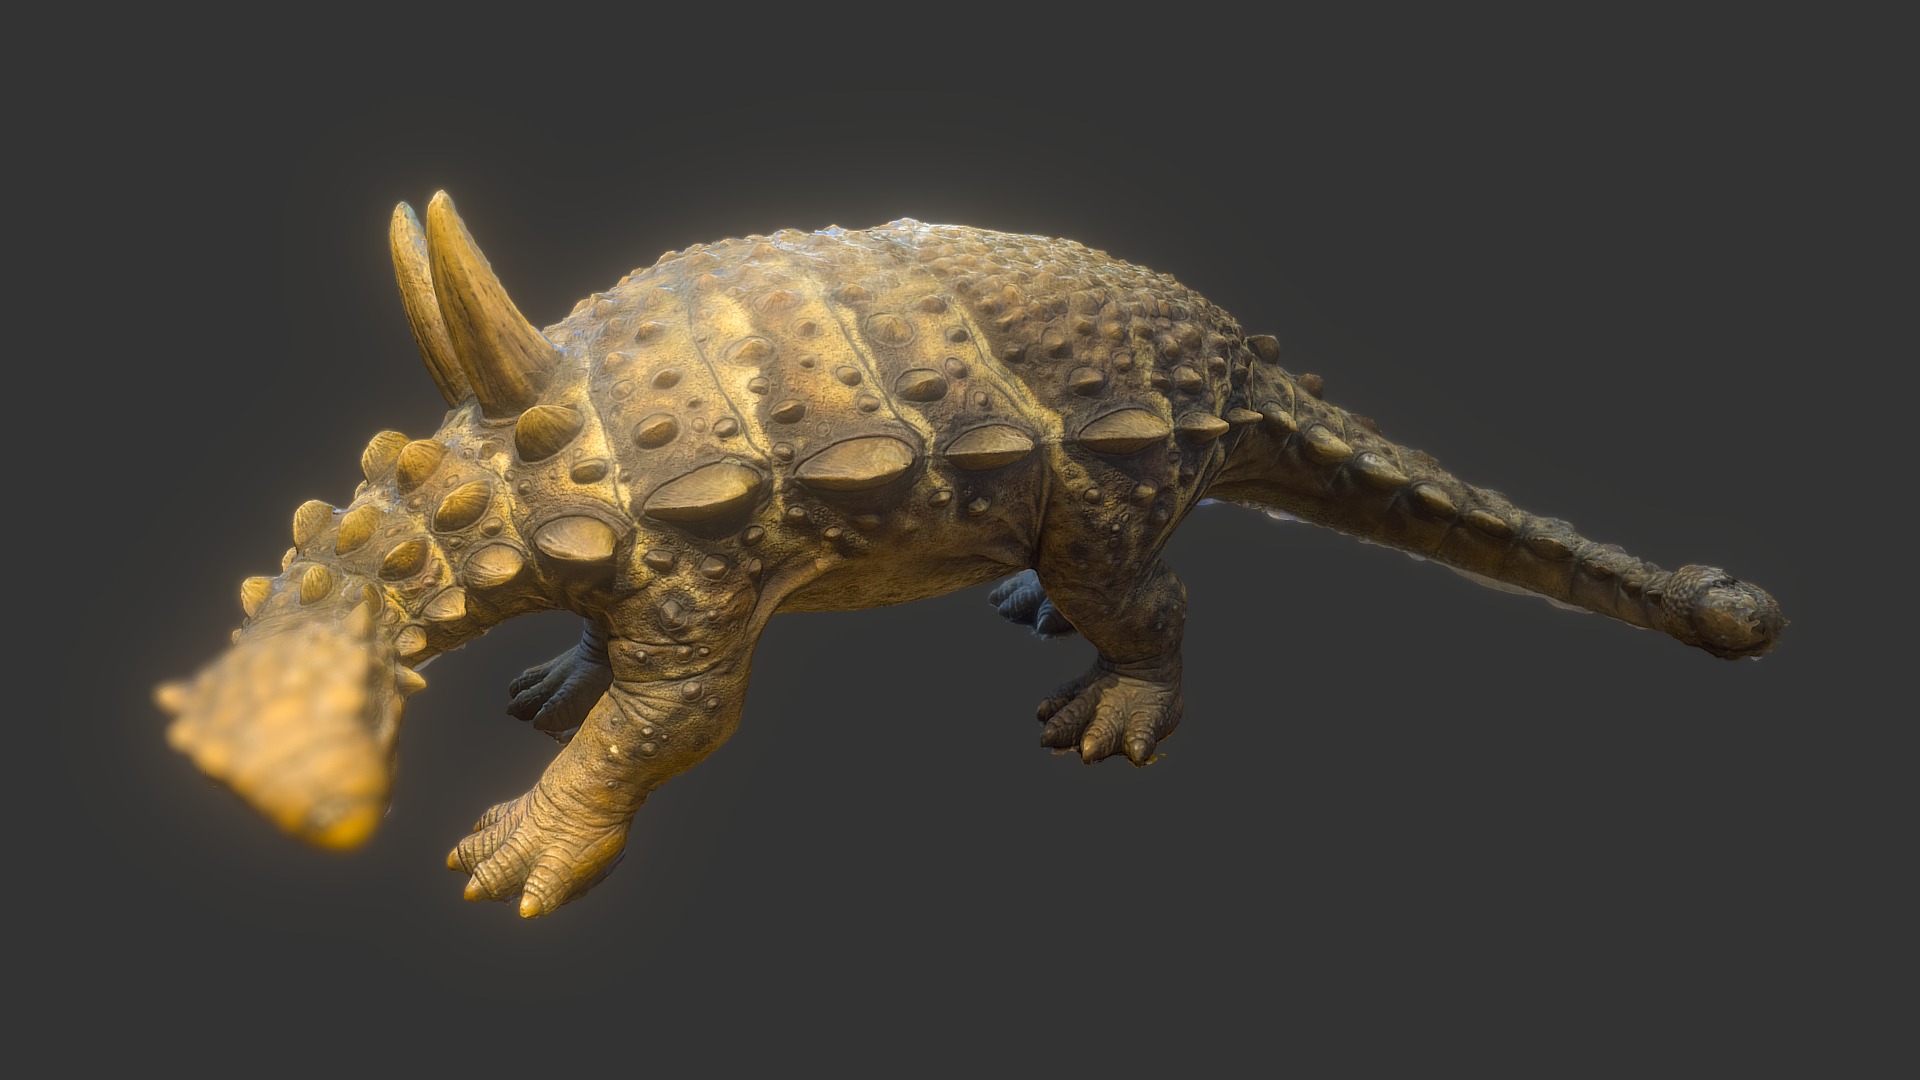 3D model Ankylosaurus – The NAT Museum, San Diego - This is a 3D model of the Ankylosaurus - The NAT Museum, San Diego. The 3D model is about a skull of an animal.